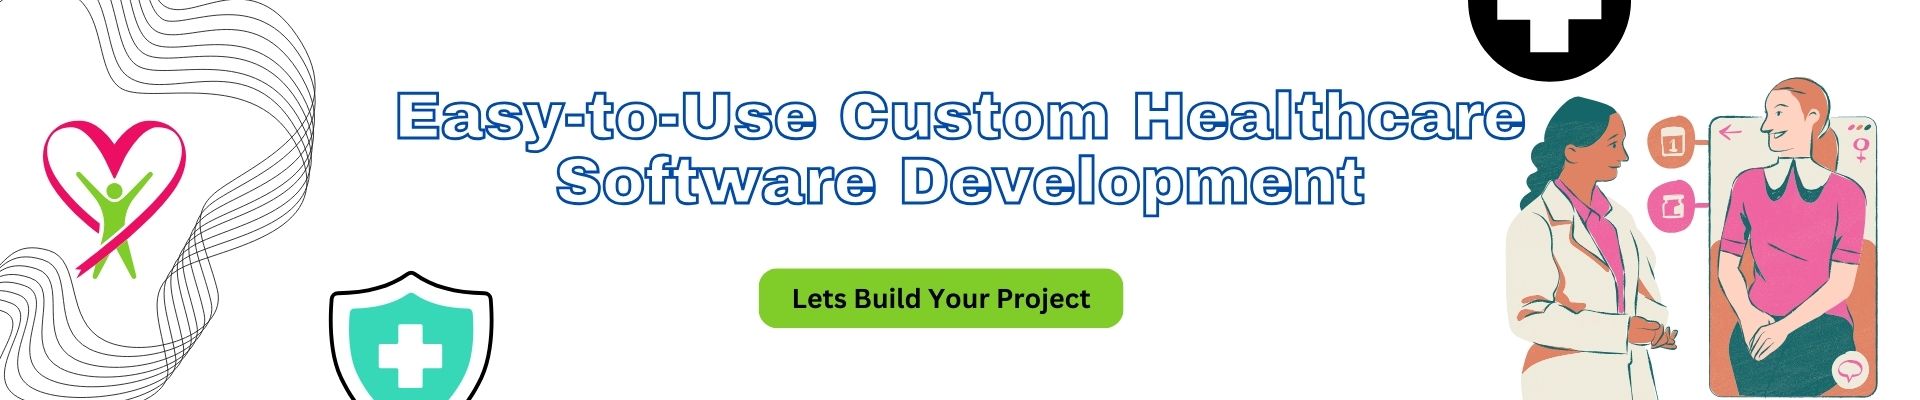 Easy-to-Use Custom Healthcare Software Development